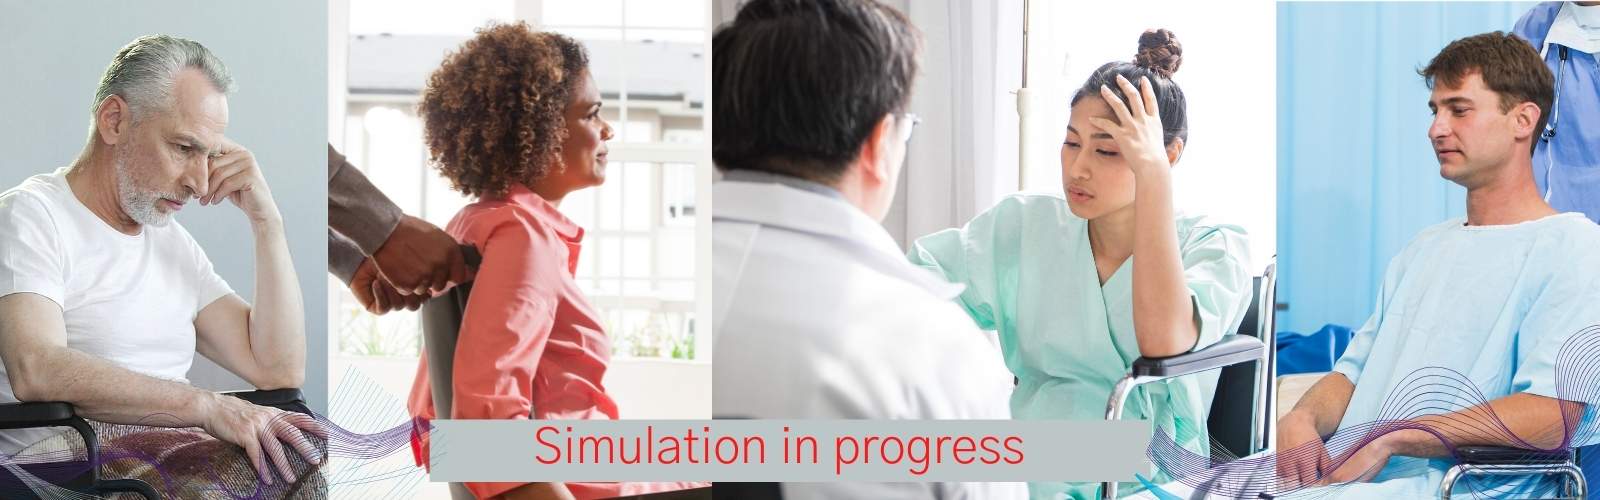 iCELS-standardized-patient-simulation-diverse-inclusive-demographic-USA-New-England-Massachusetts-Boston-Worcester-recruit-hire-SP.jpg